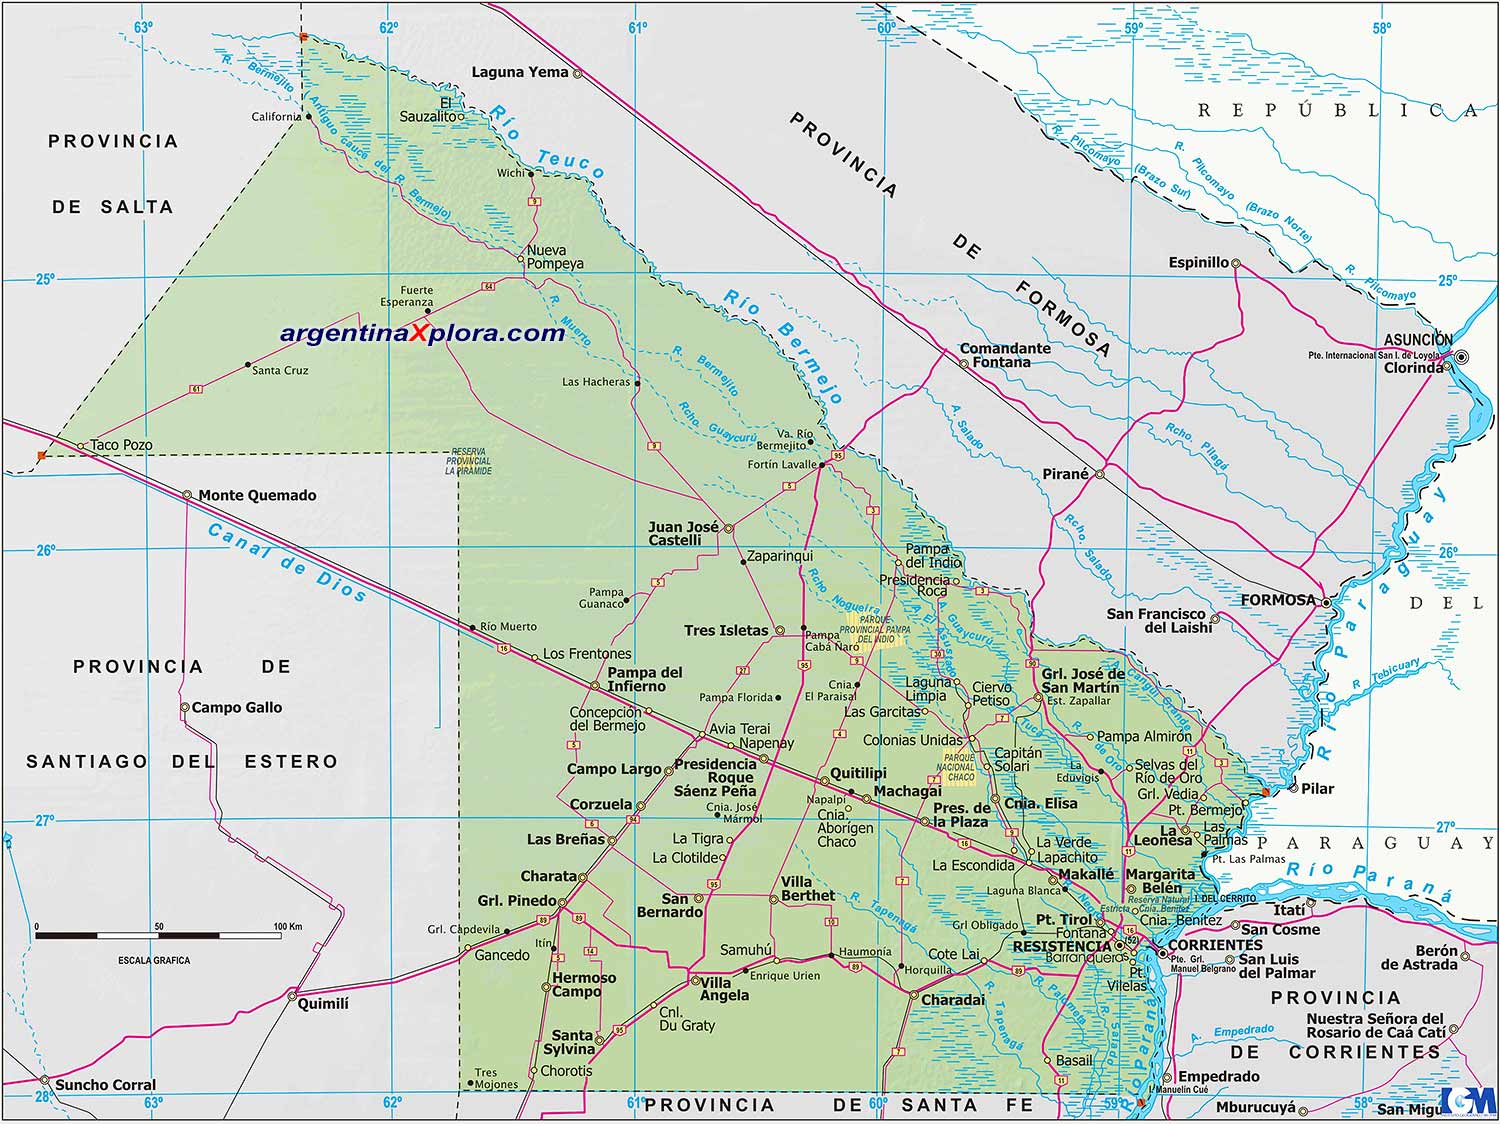 Mapa de la Provincia del Chaco - Argentina